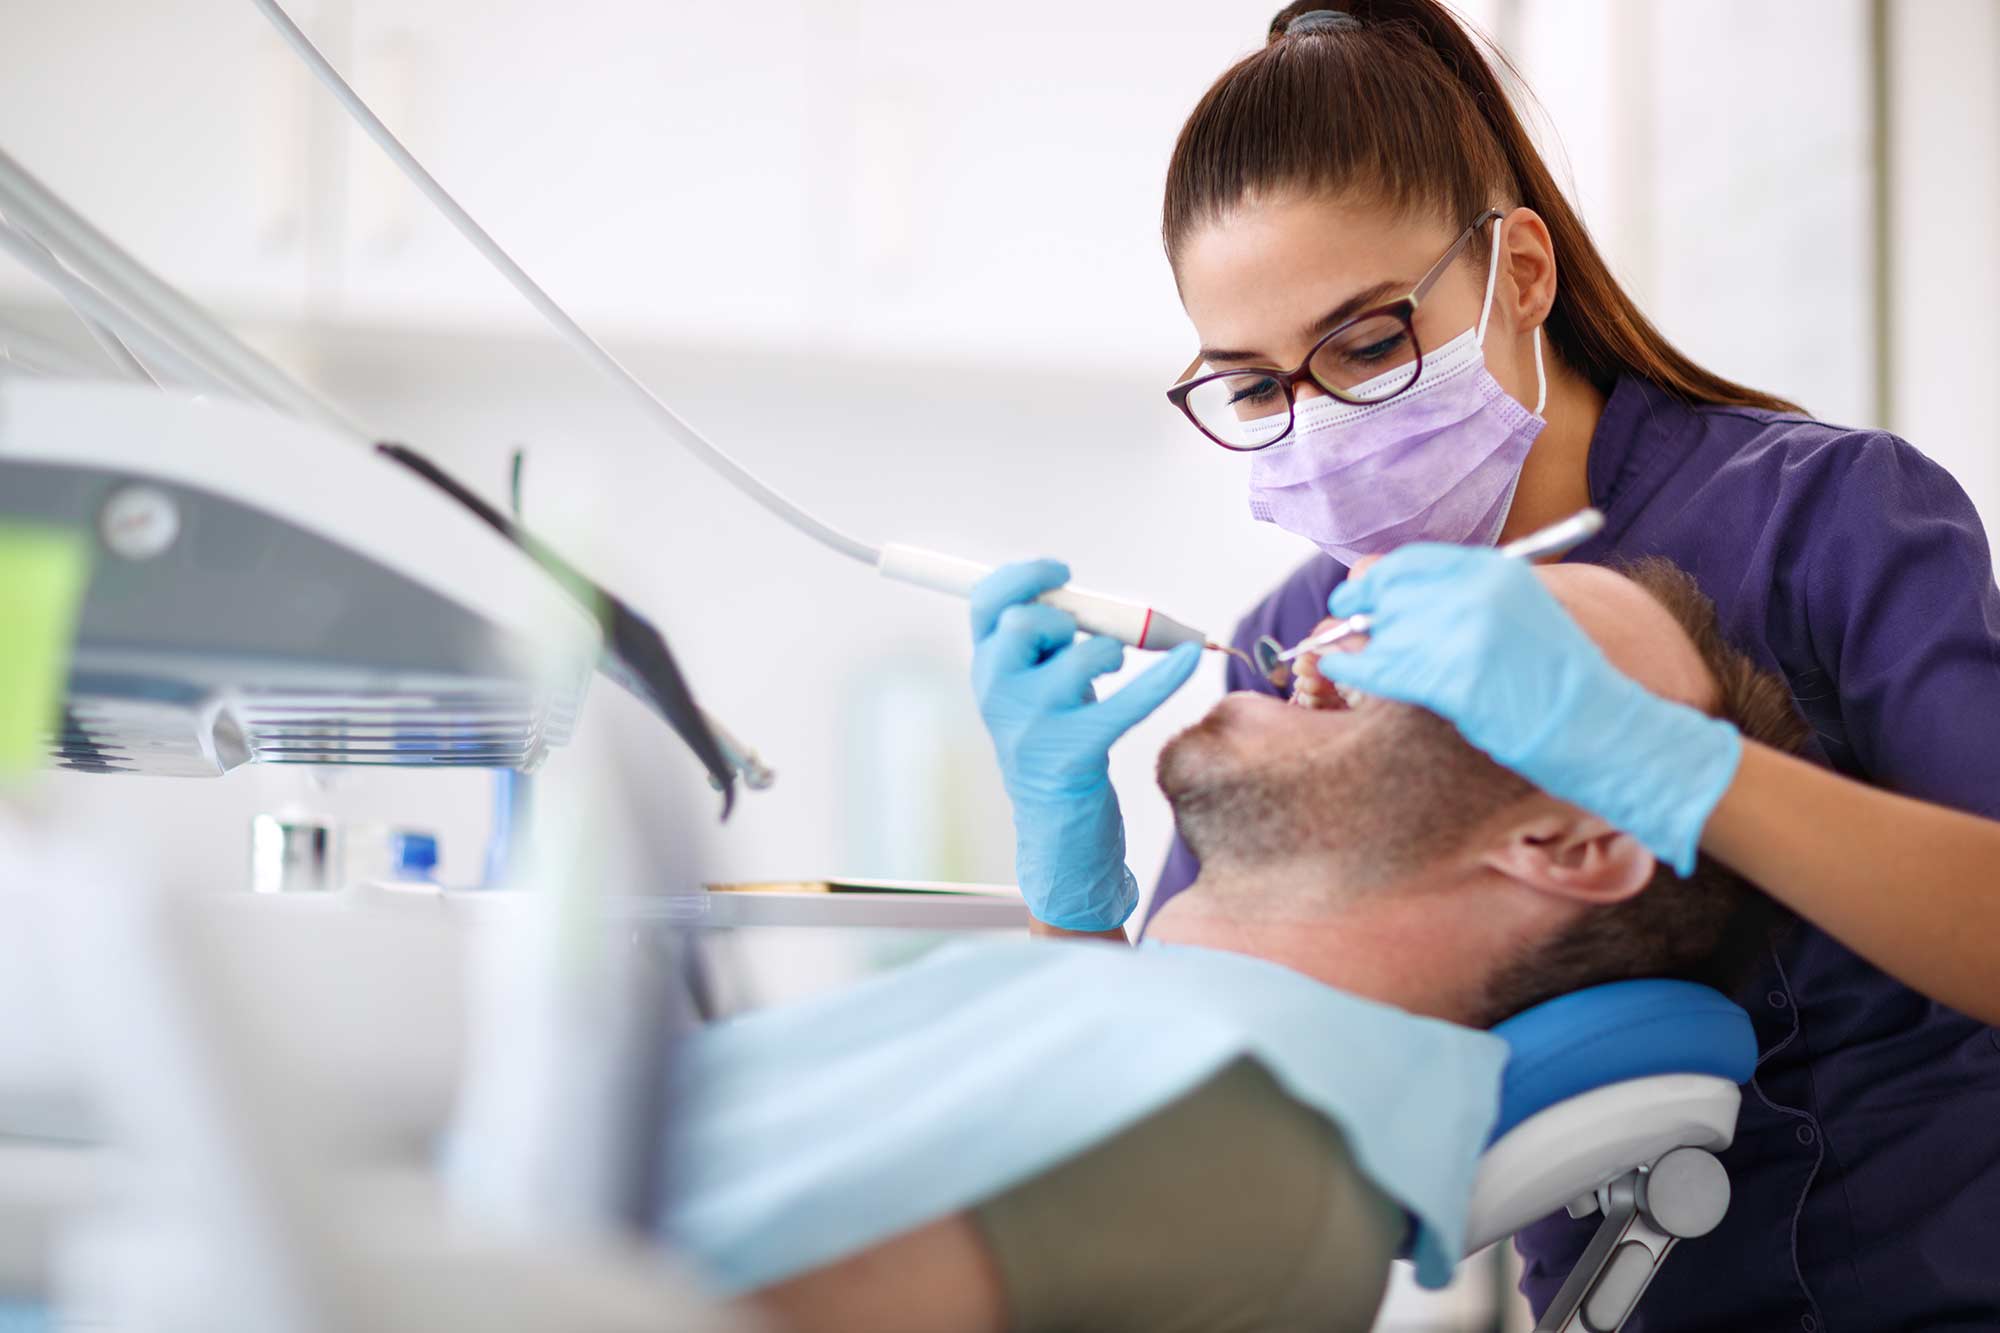 Dentists quit medical card scheme following COVID-19 – Irish Dentistry